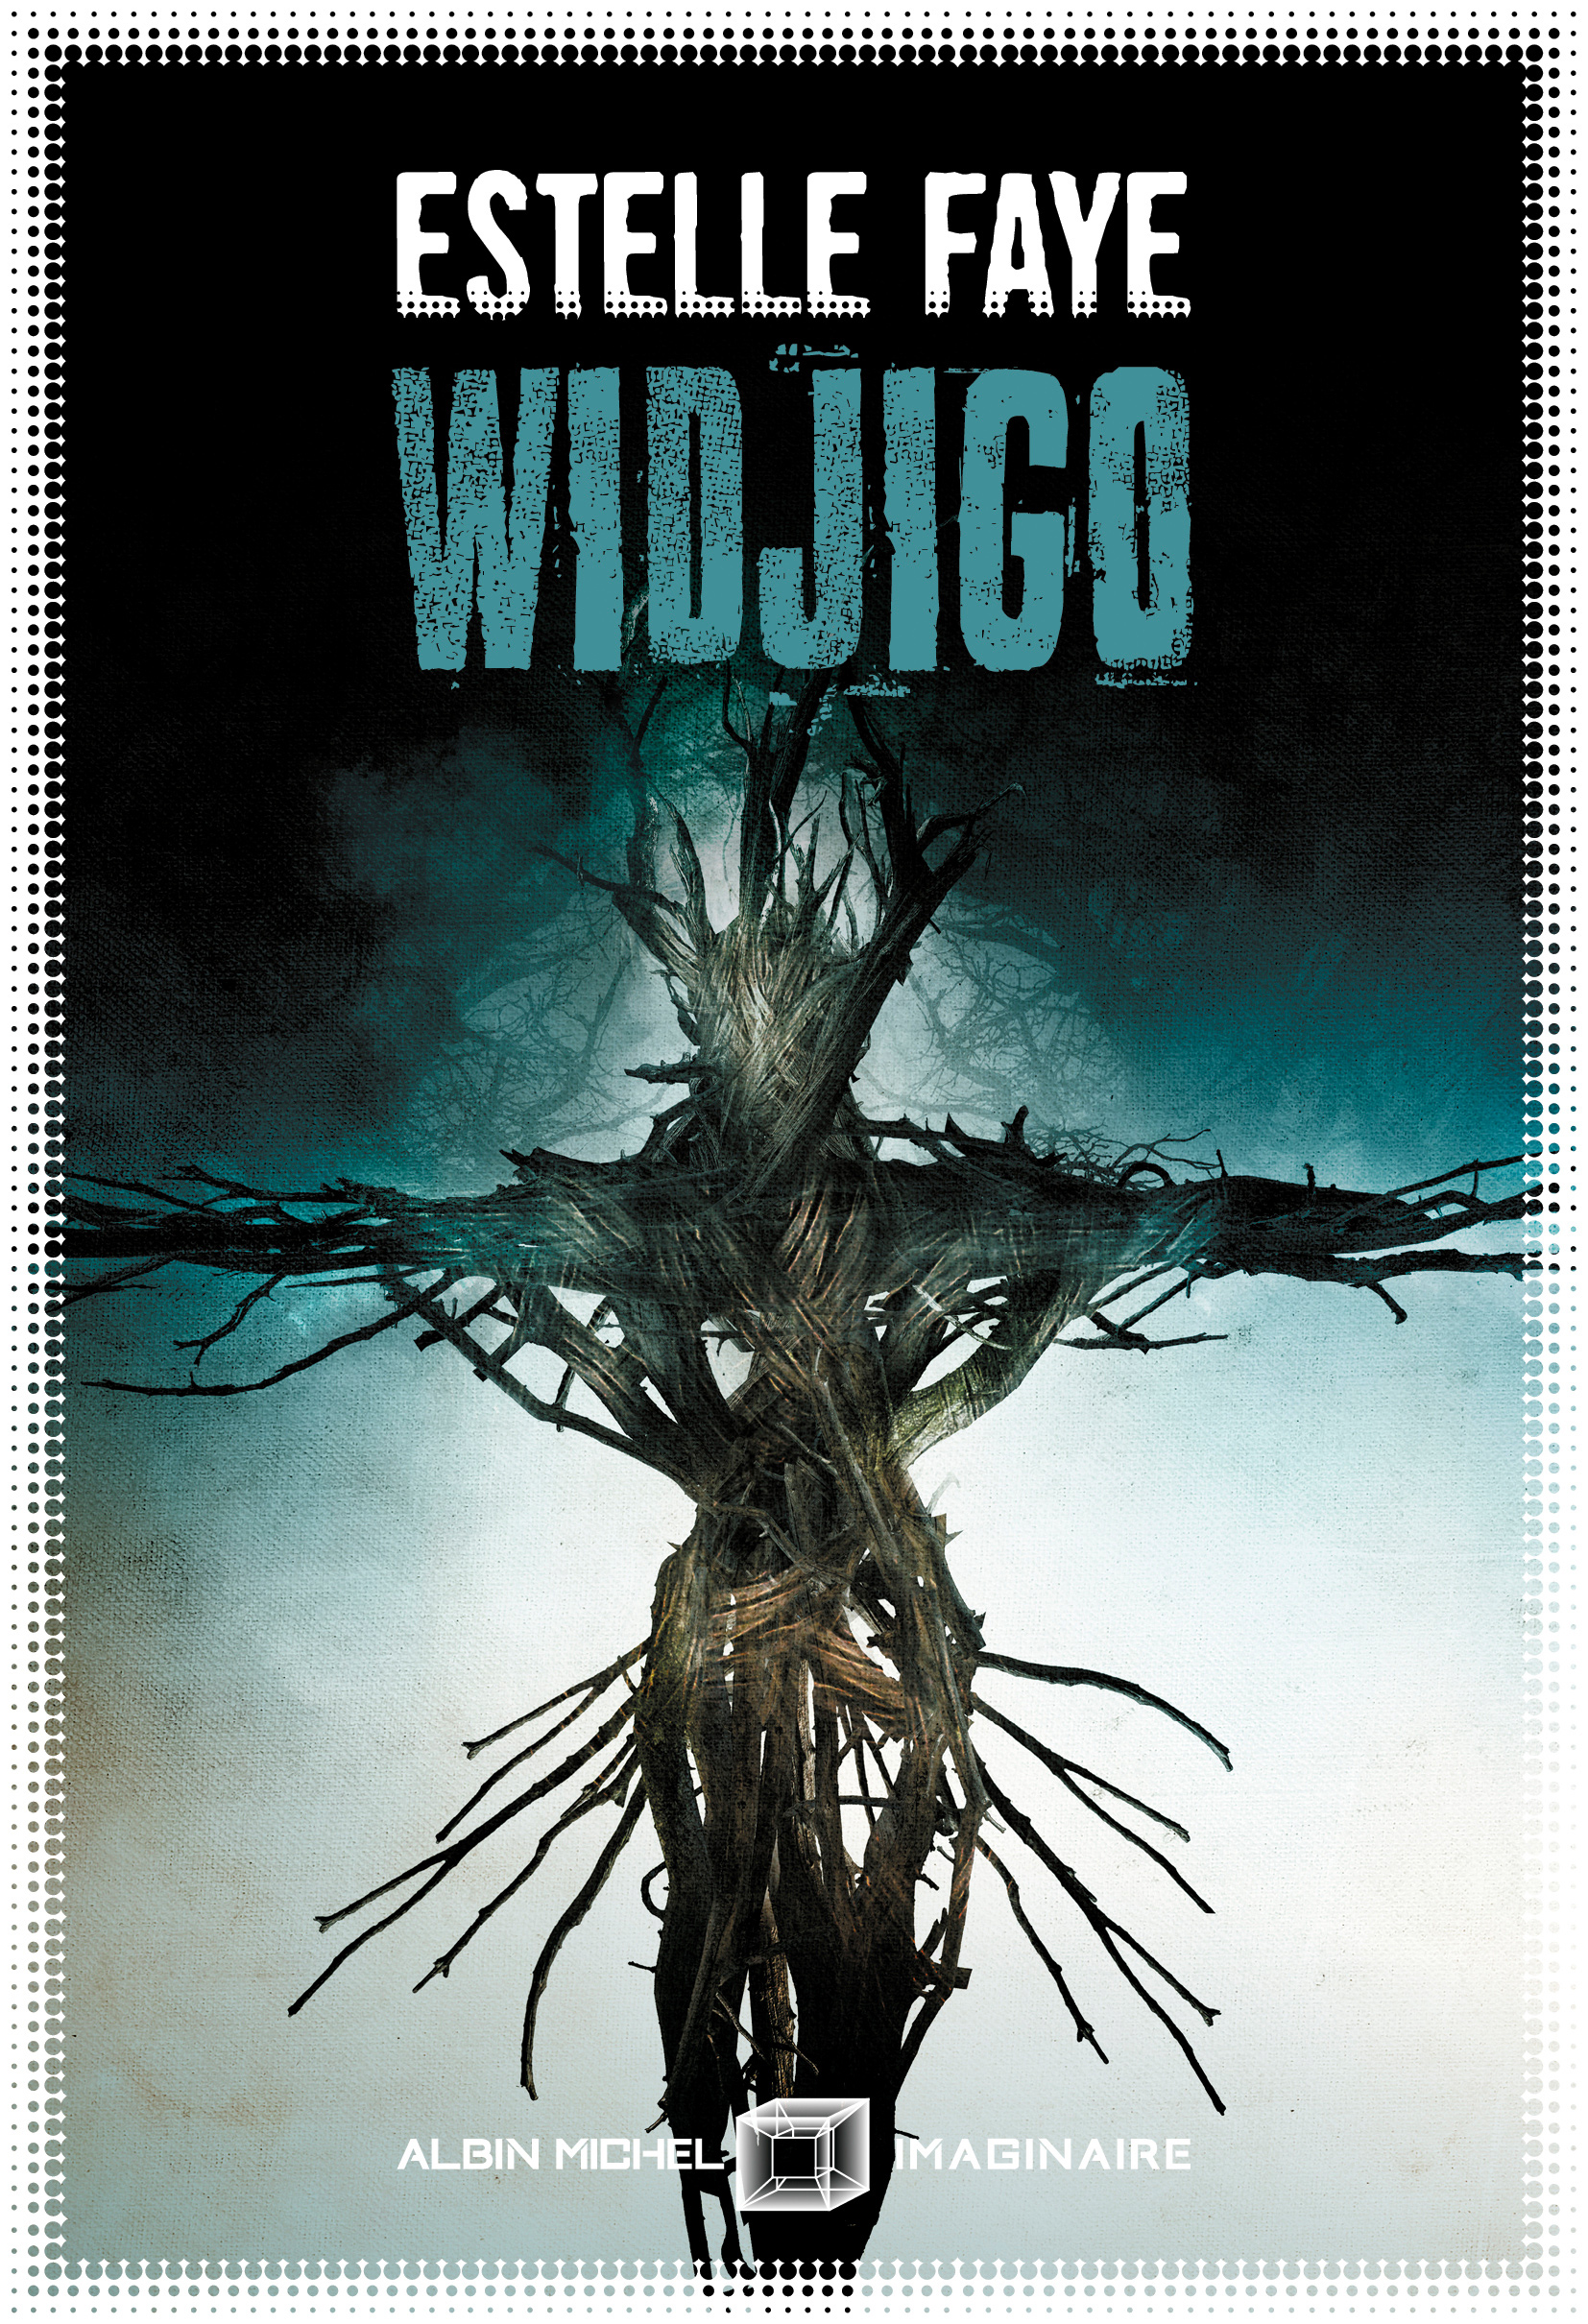 Couverture du livre Widjigo